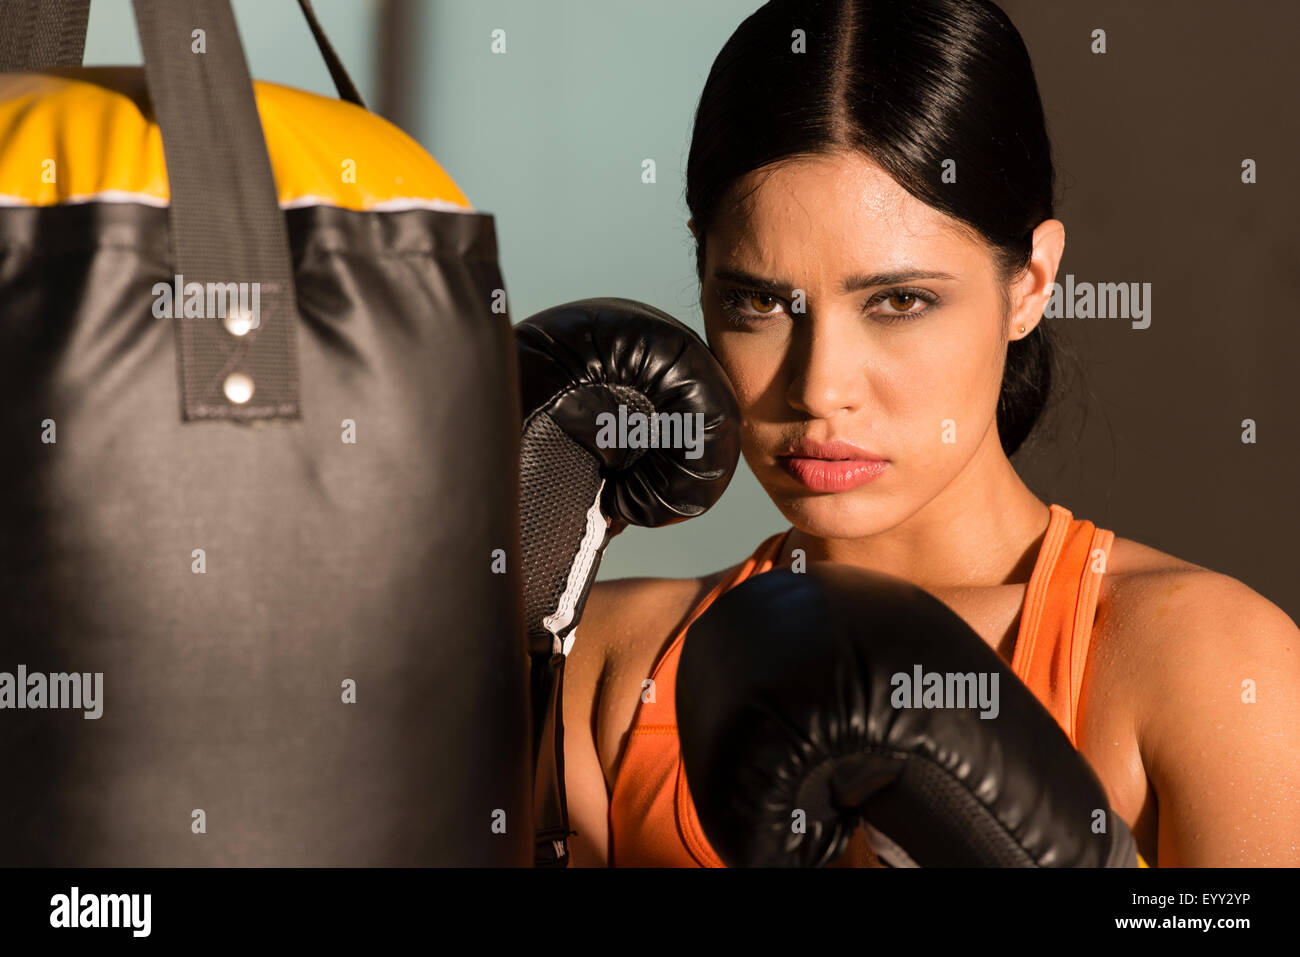 Hispanic boxer standing near punching bag in gymnasium Stock Photo